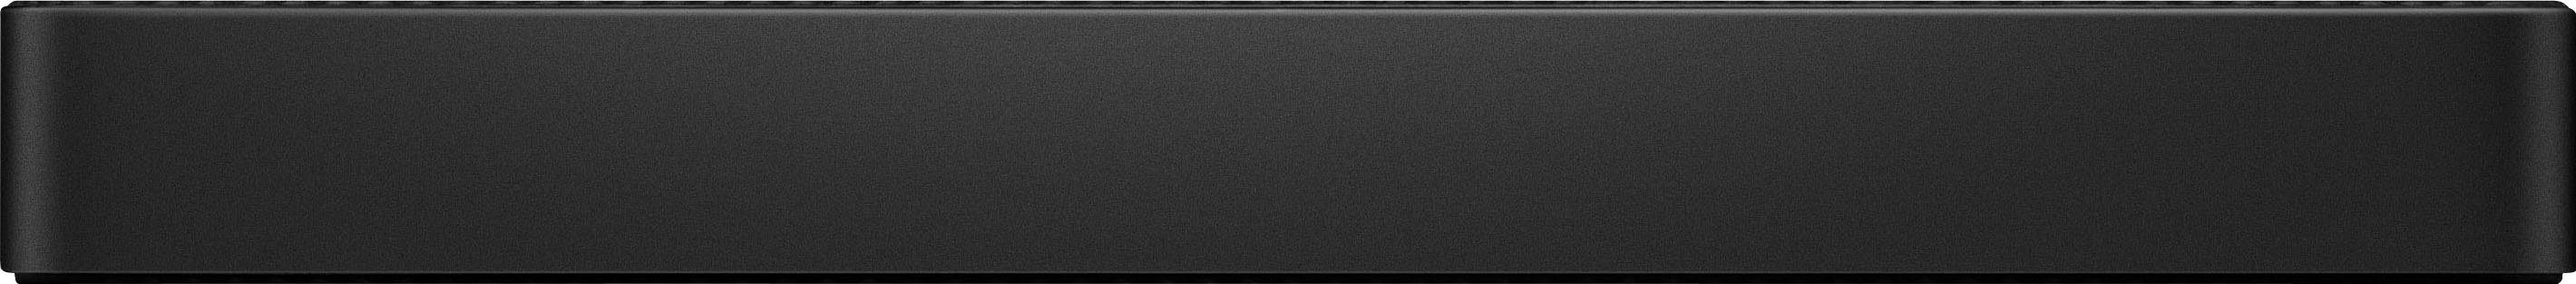 2TB HDD-Festplatte 2,5" TB) Expansion Seagate externe Portable (2